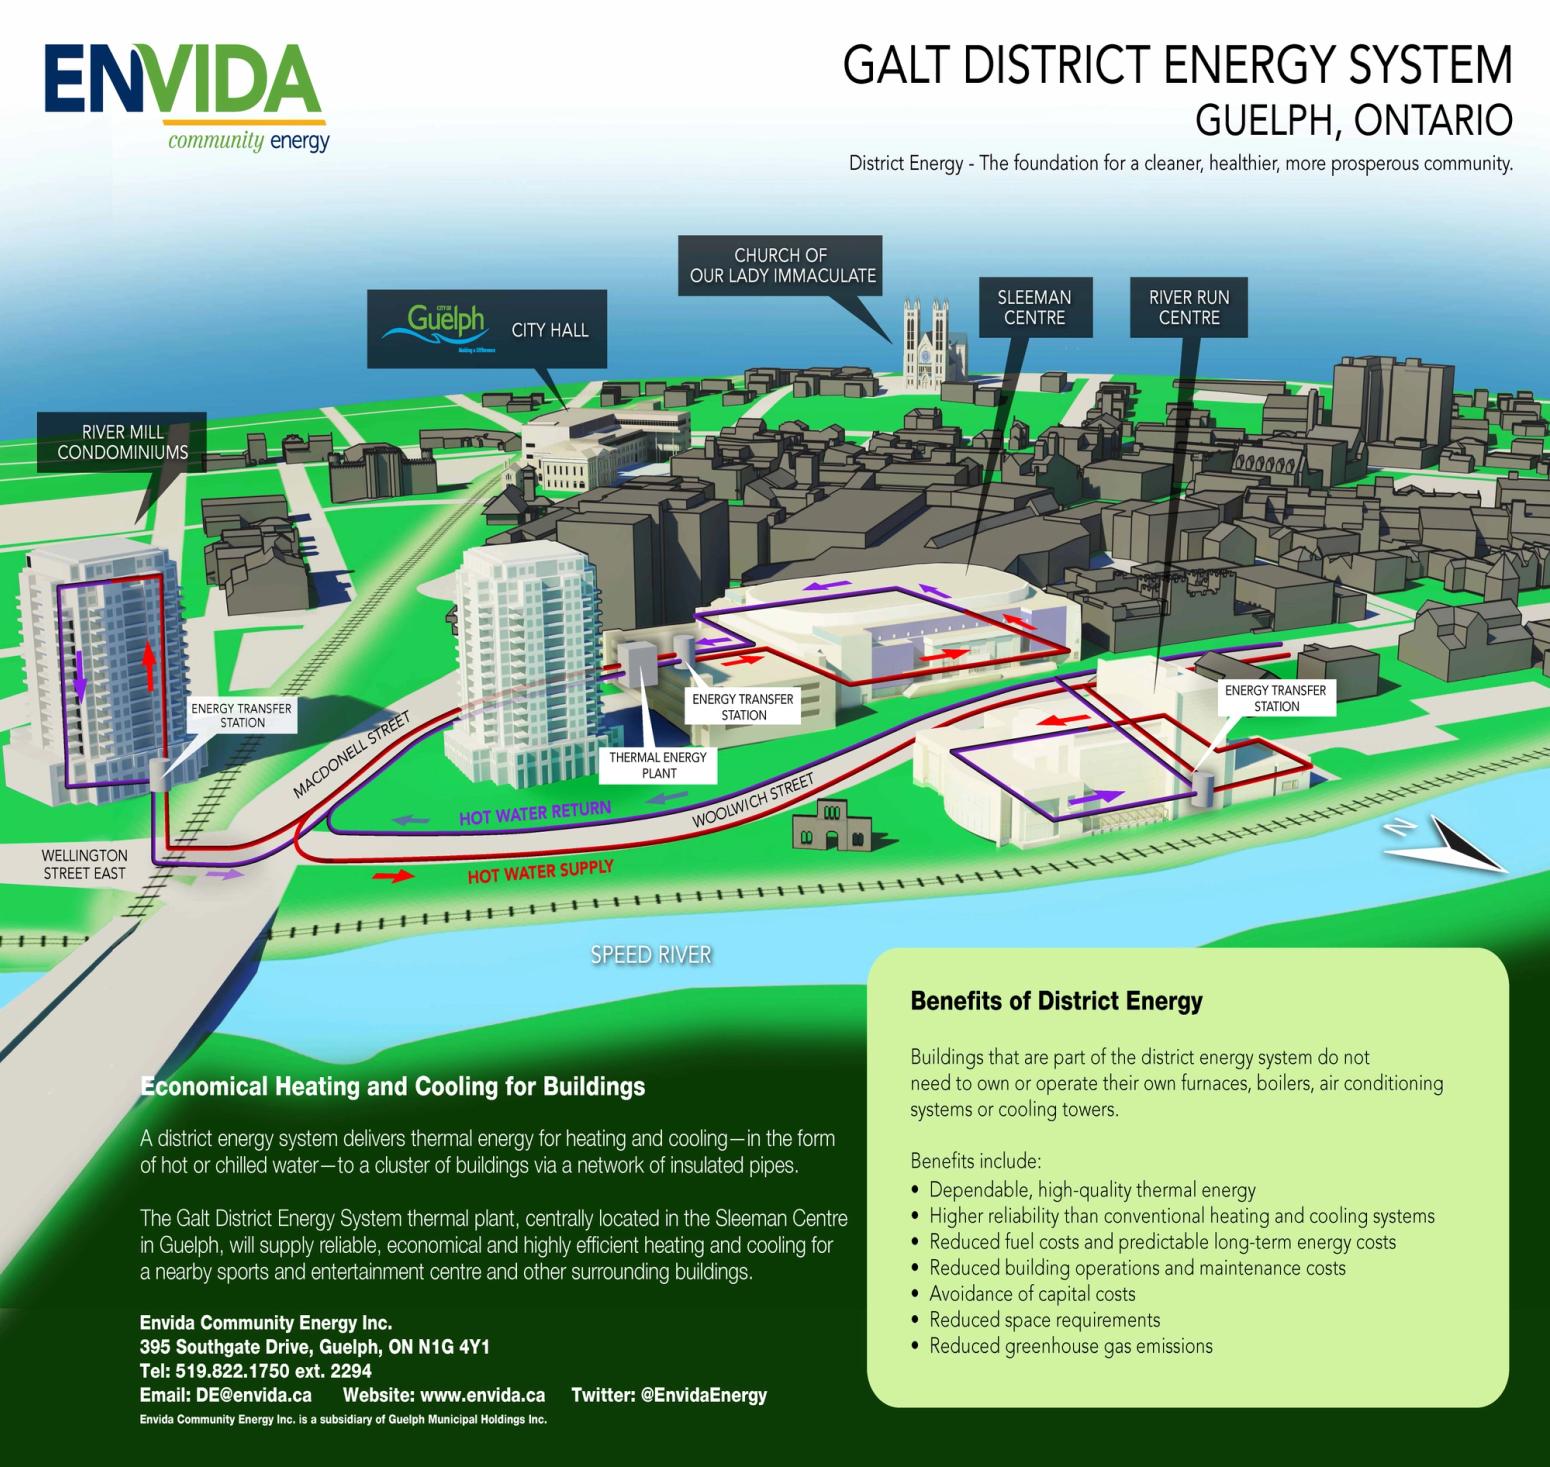 Galt District Energy System image